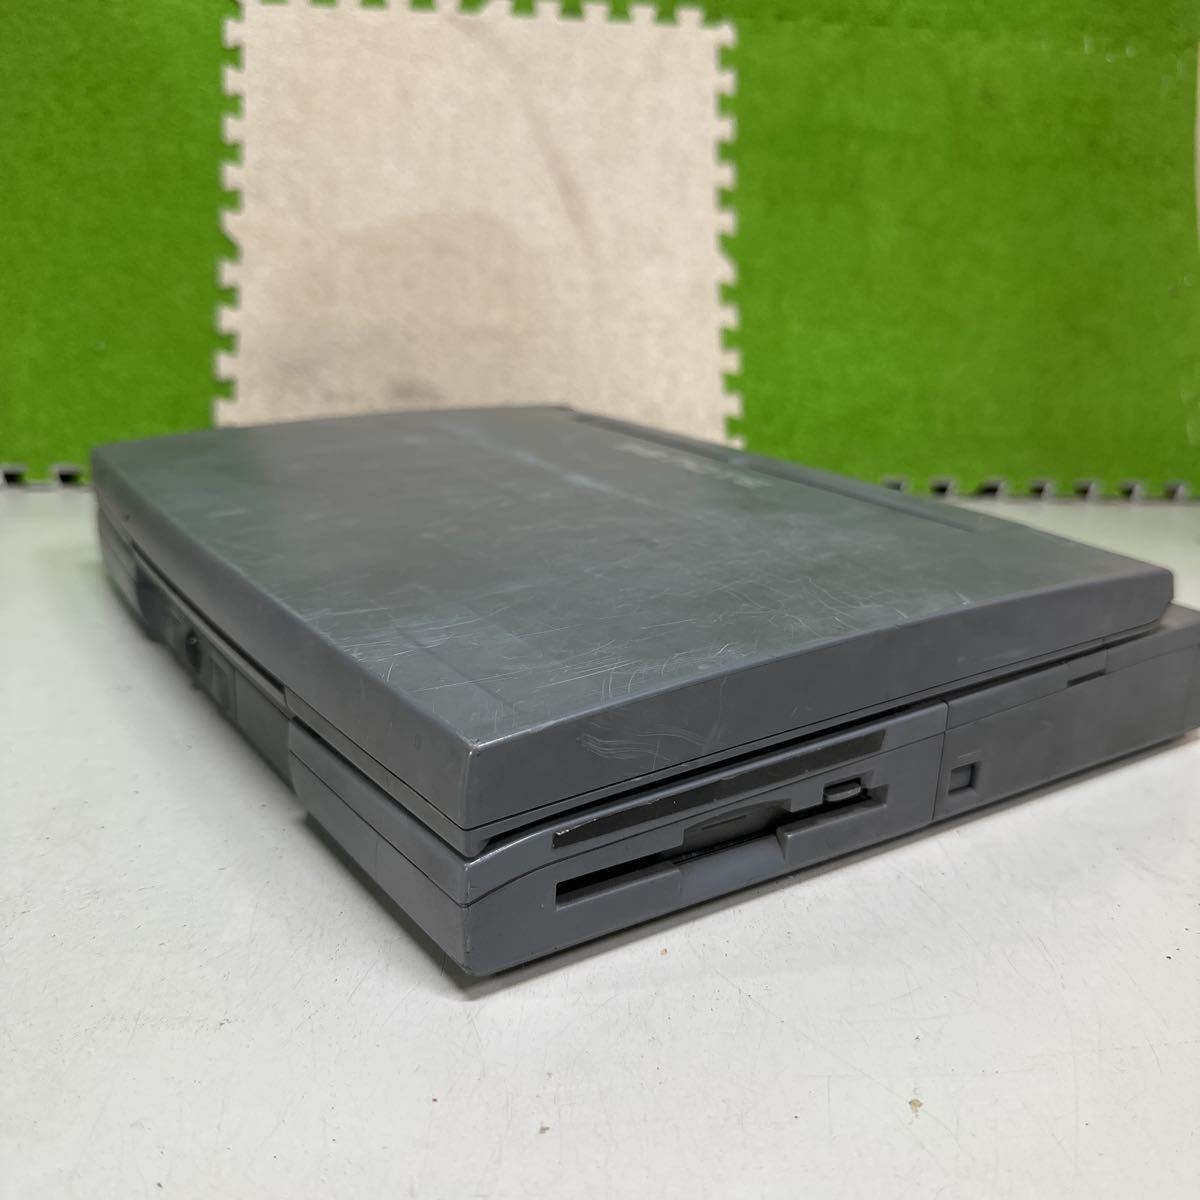 PCN98-546 супер-скидка PC98 ноутбук NEC PC-9821Ne3/5 электризация не возможно Junk 